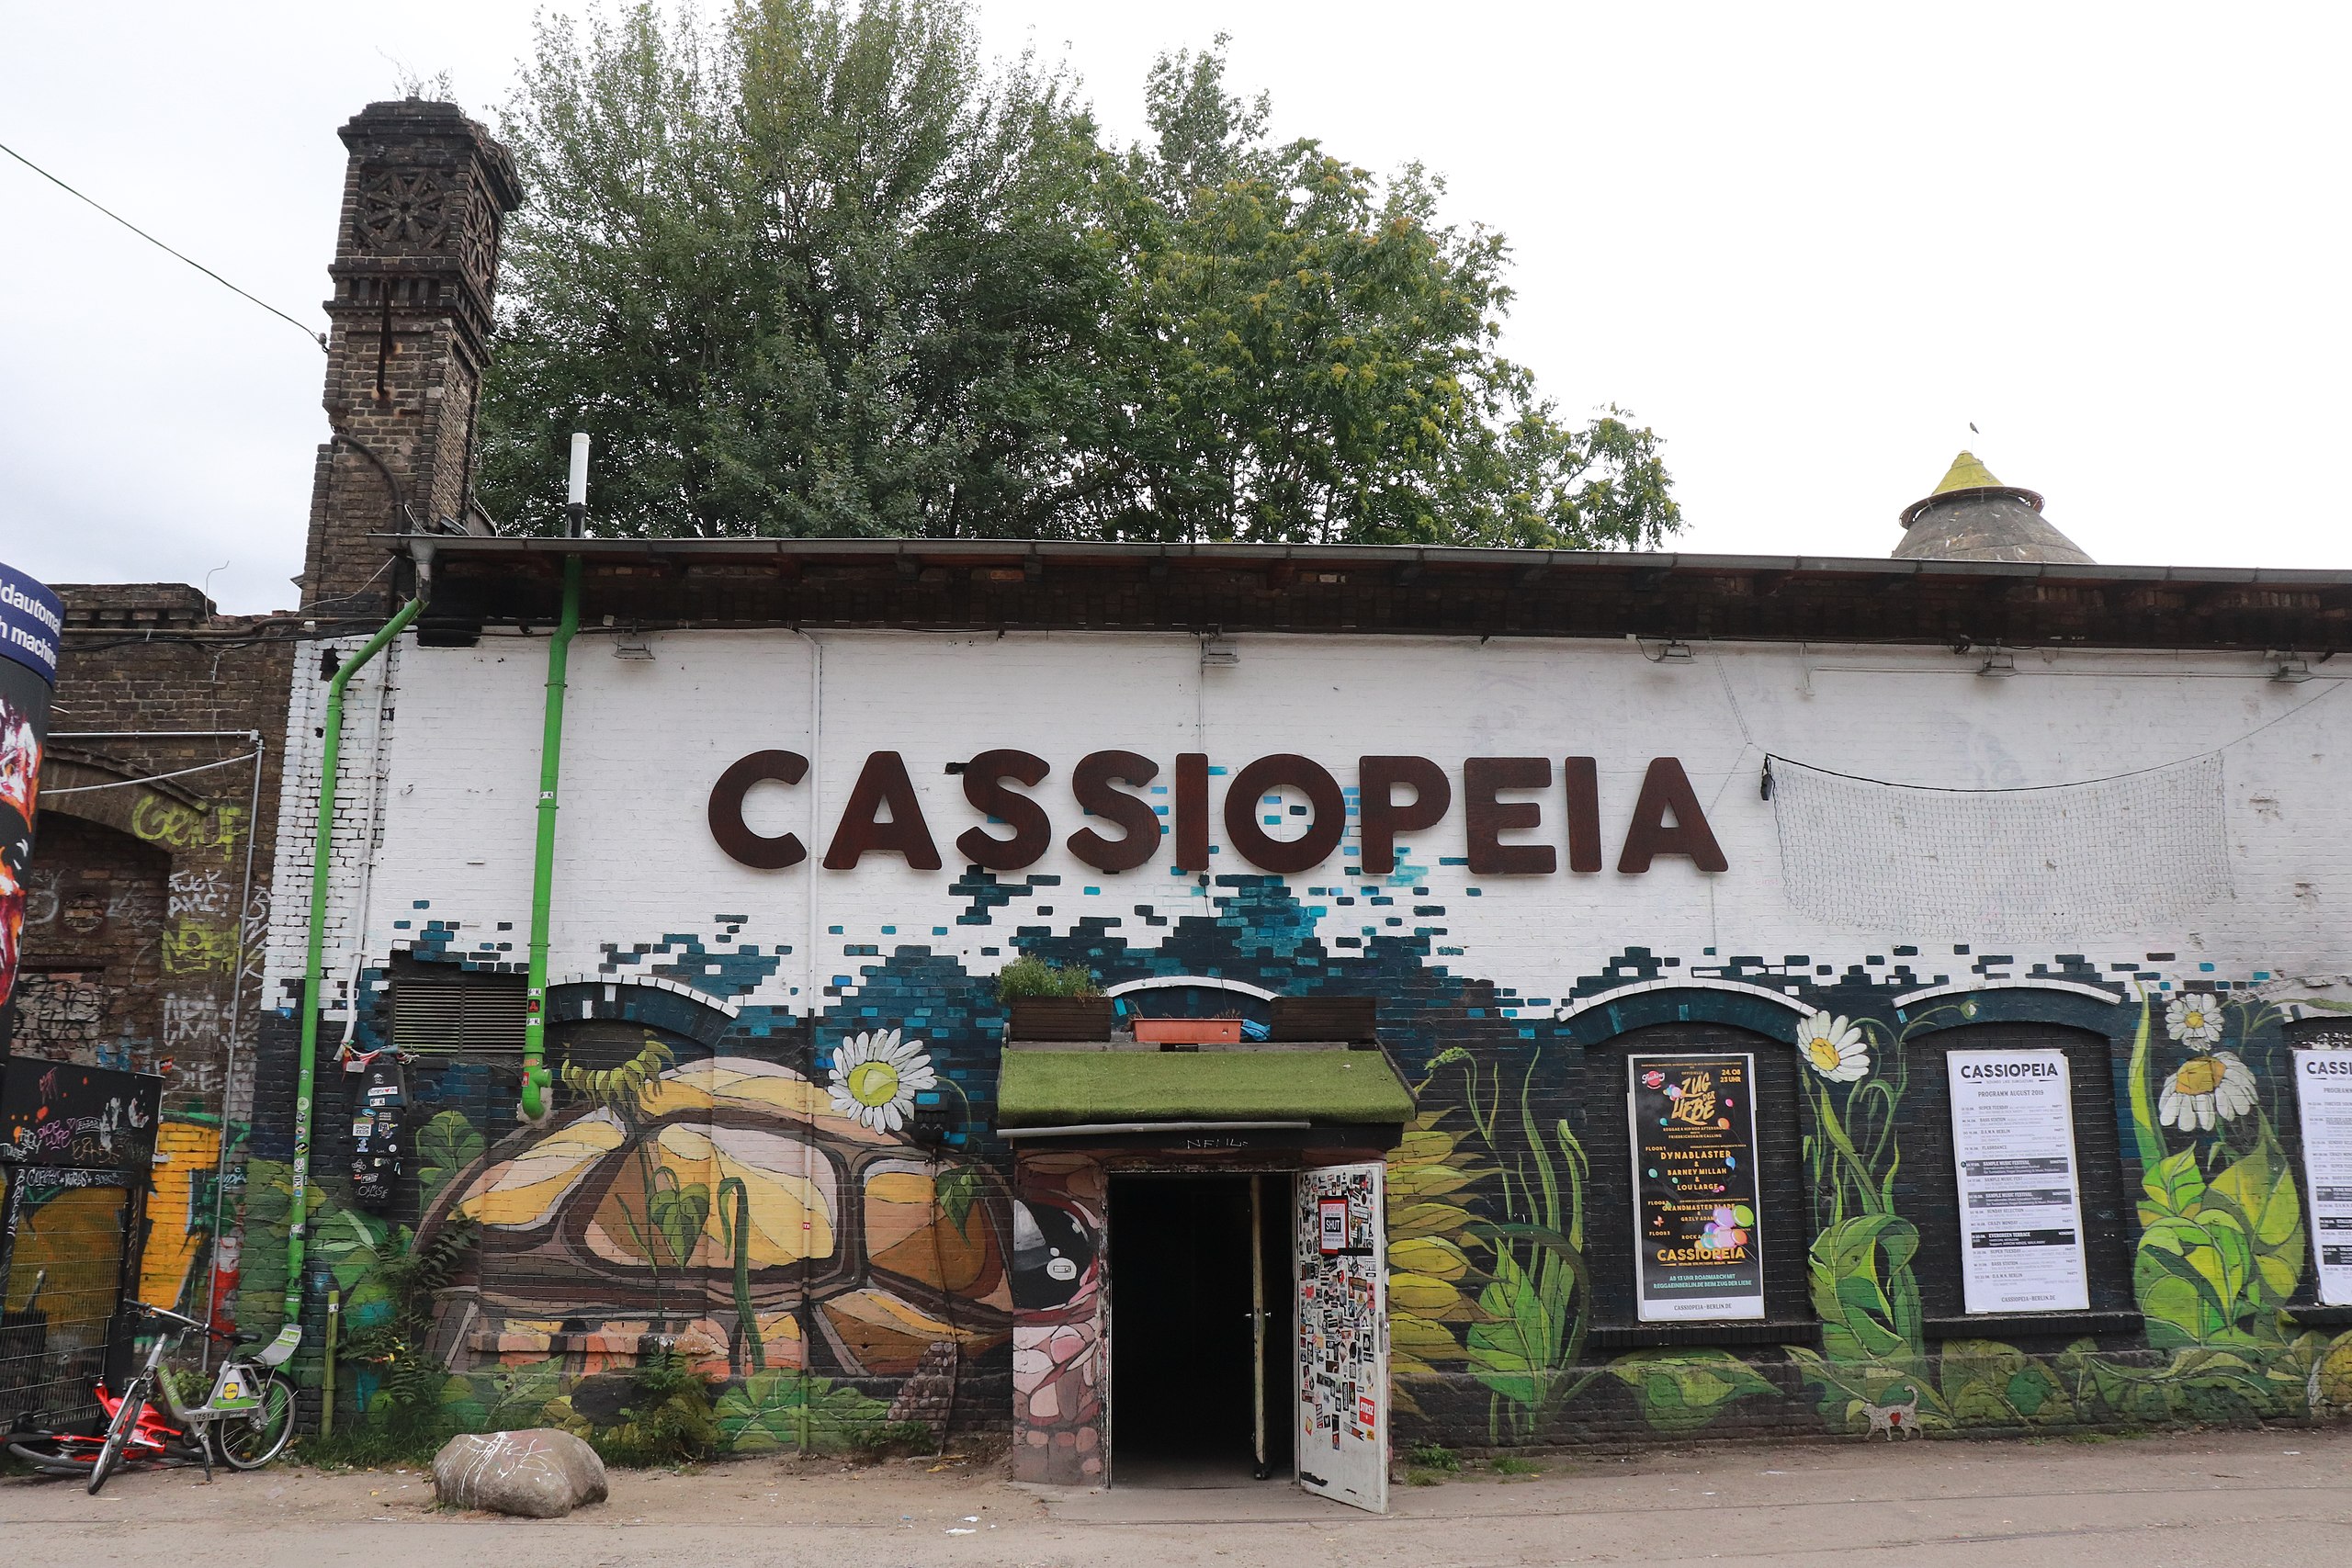 Cassiopeia at RAW Gelande. Photo by Andrzej Otrębski licensed under CC 4.0.